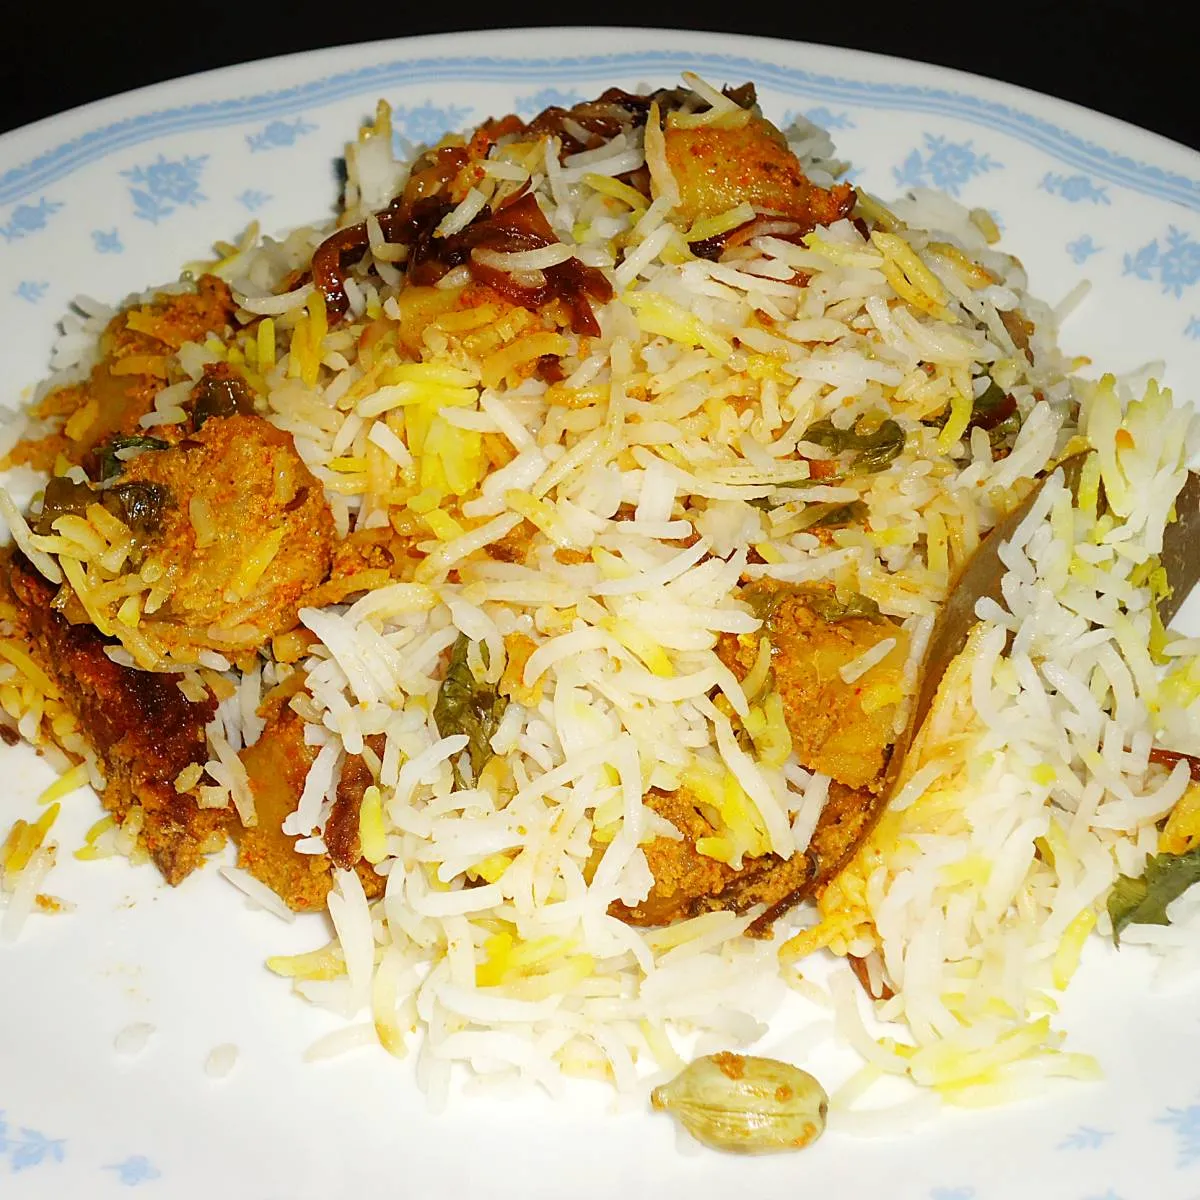 dum aloo biryani in a plate